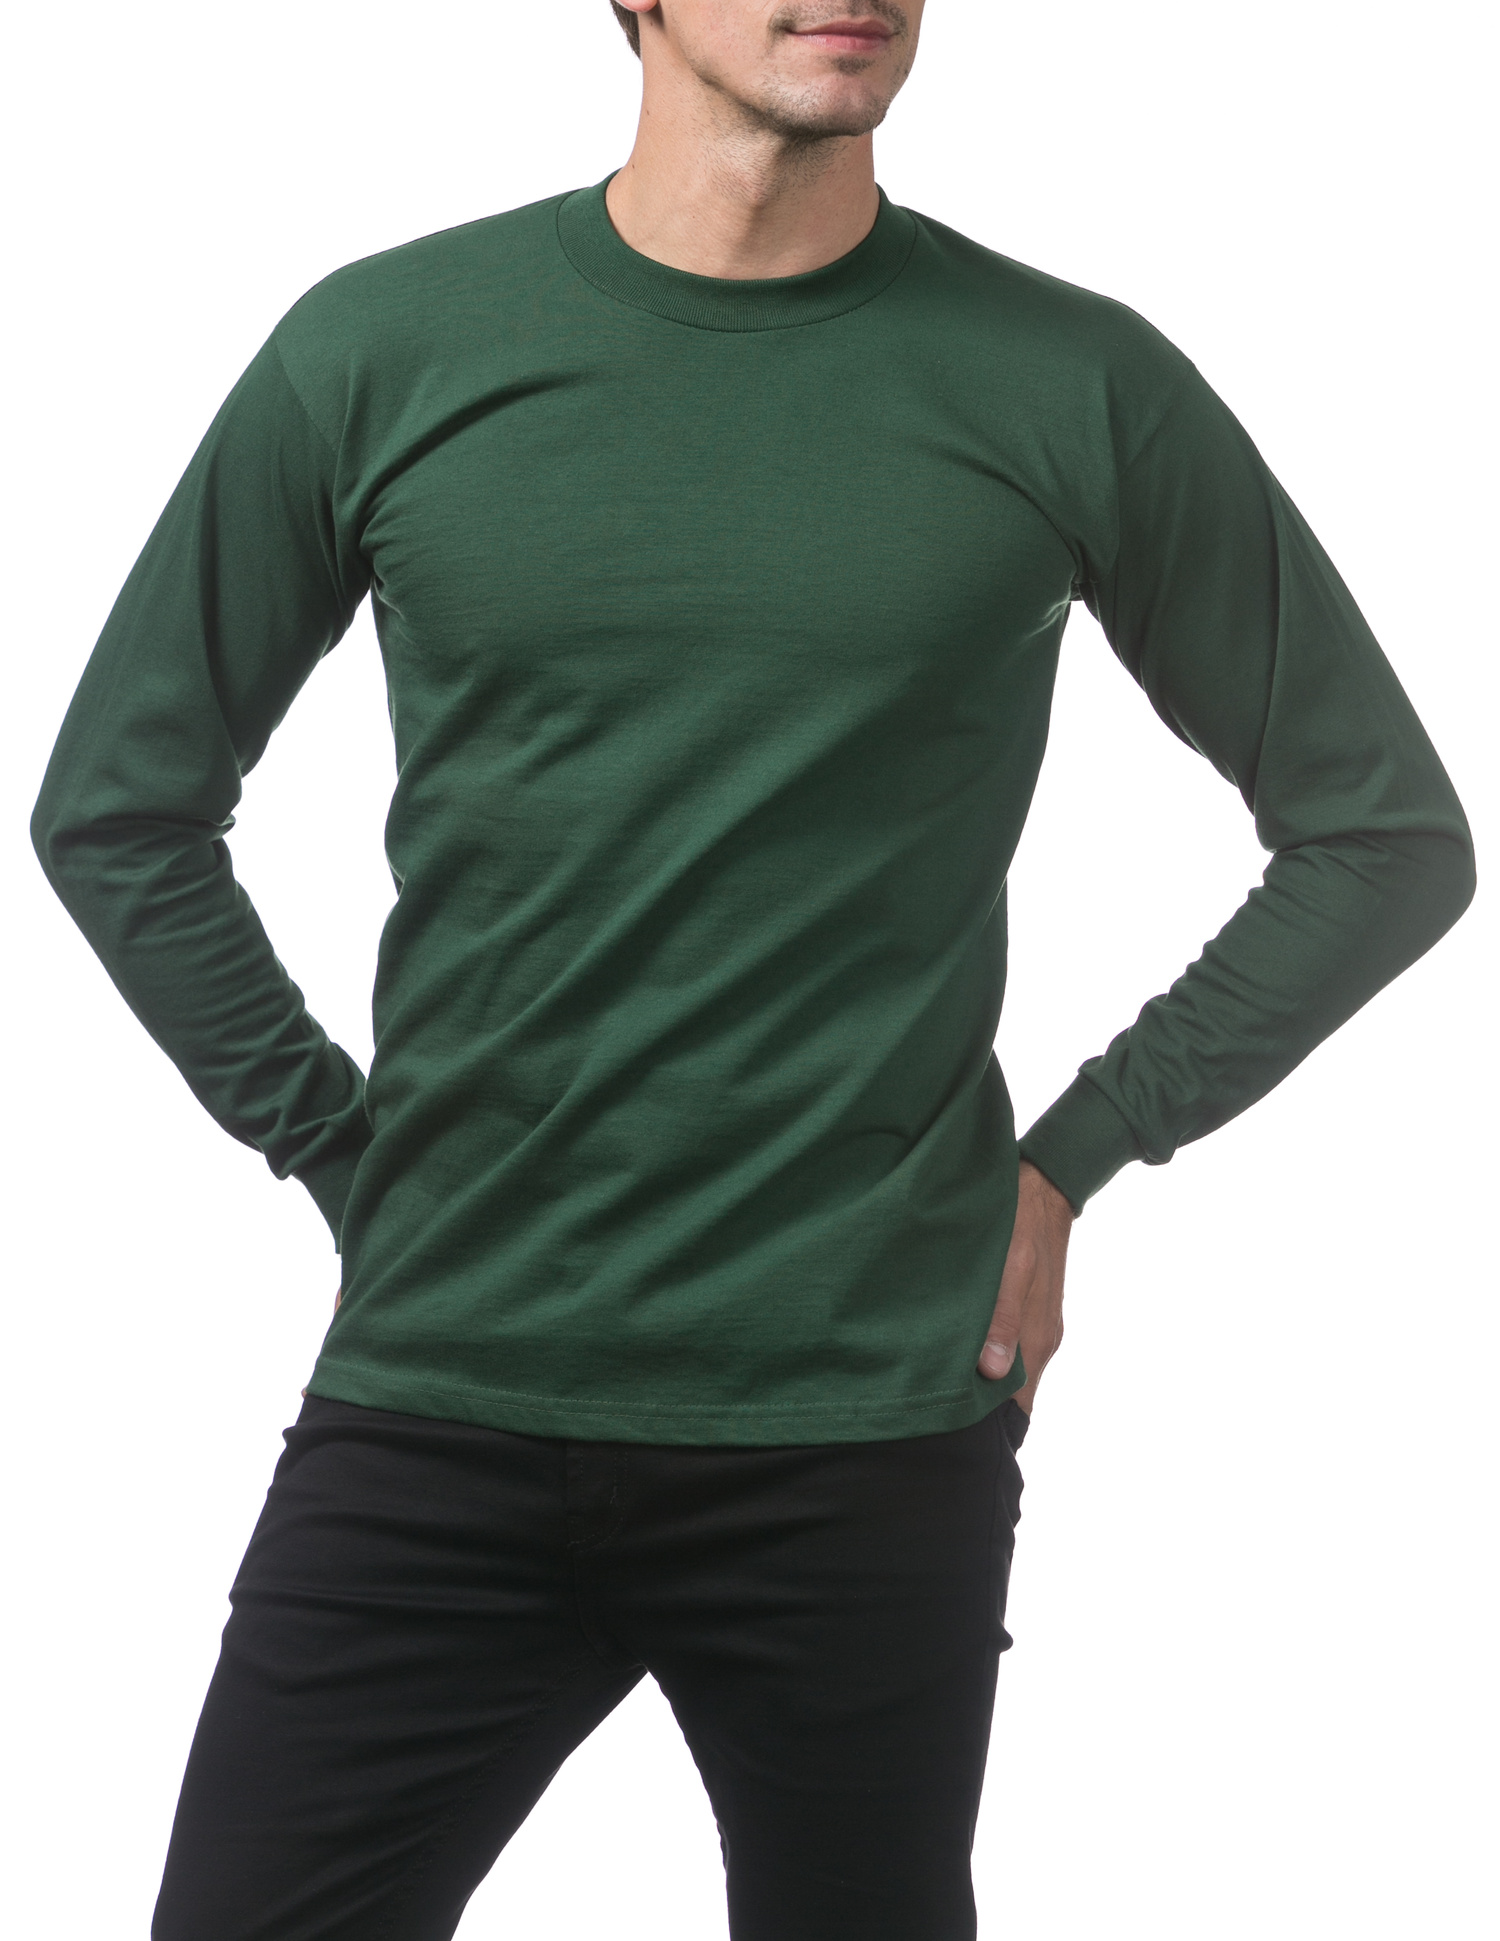 114 FOREST GREEN Heavyweight Cotton Long Sleeve Crew Neck T-Shirt - Shirts | V-Shirts